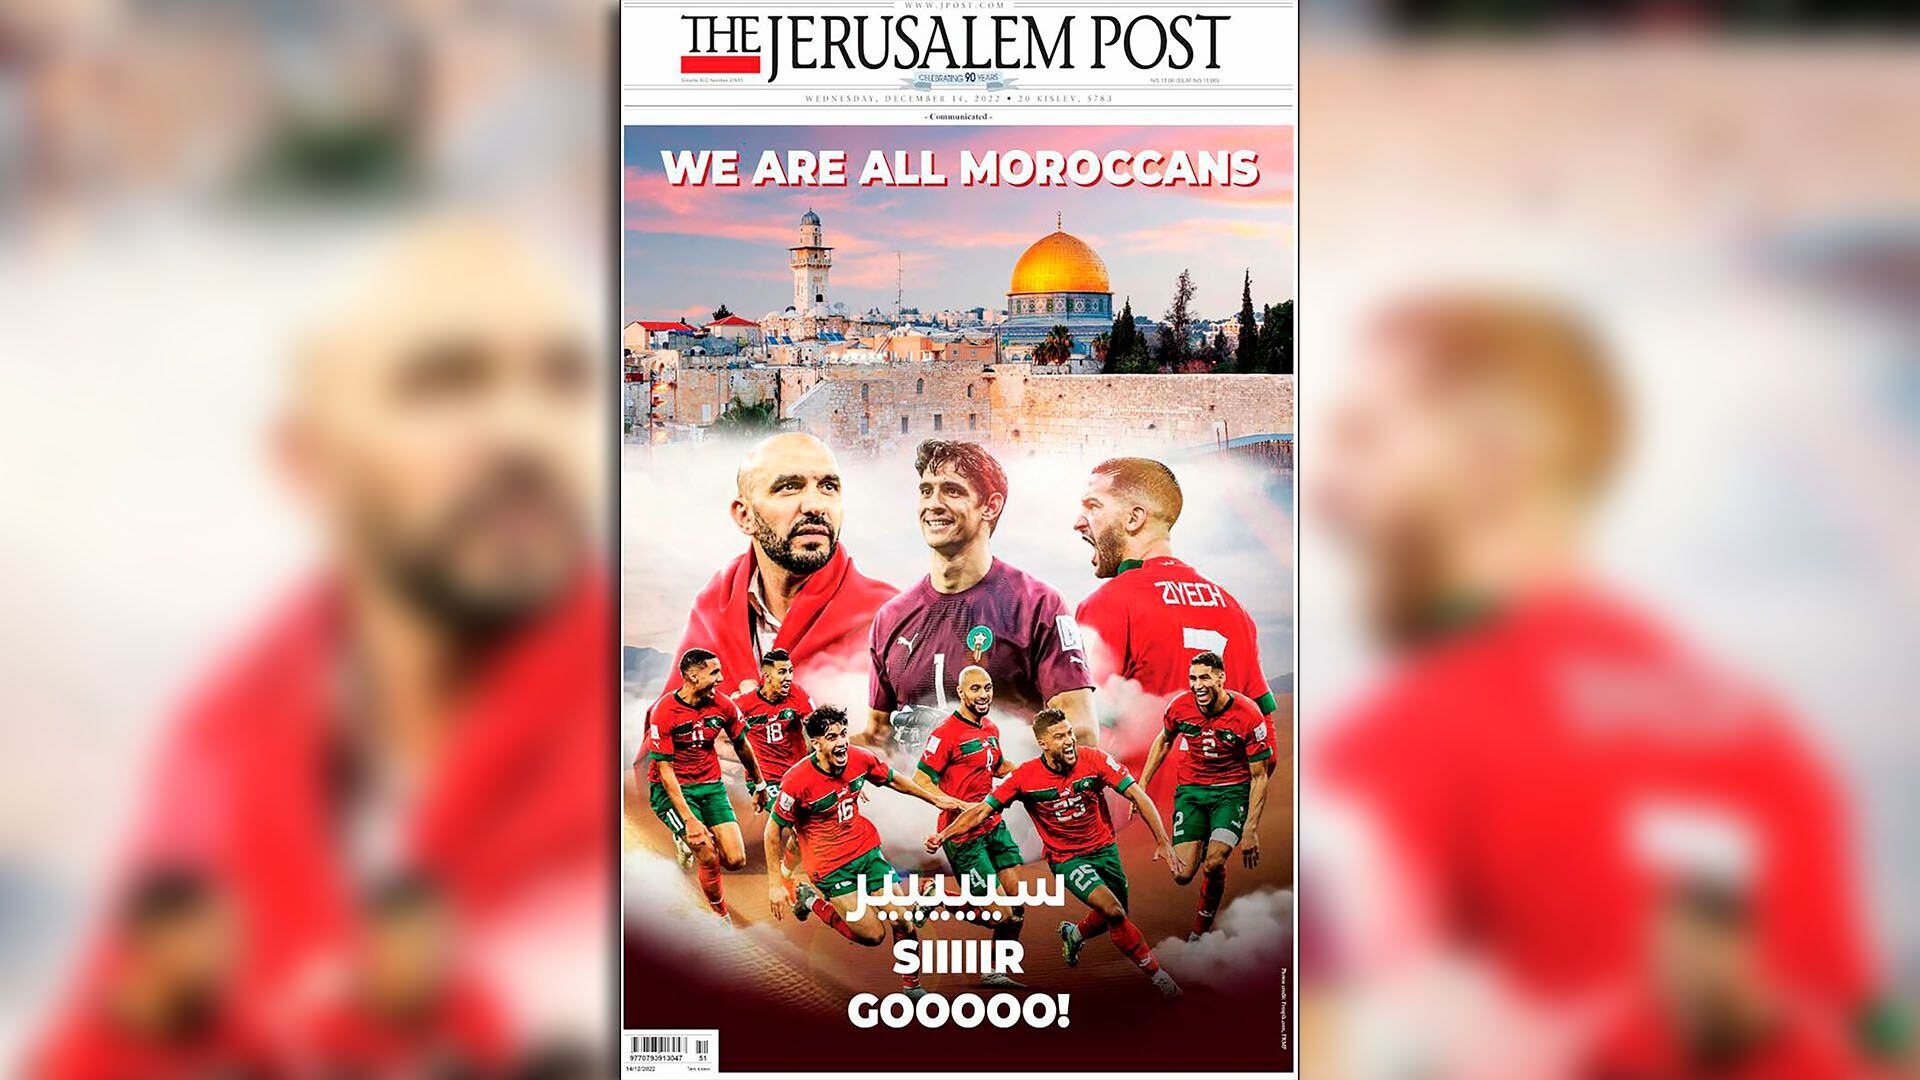 La tapa de The Jerusalem Post: "Somos todos marroquíes"